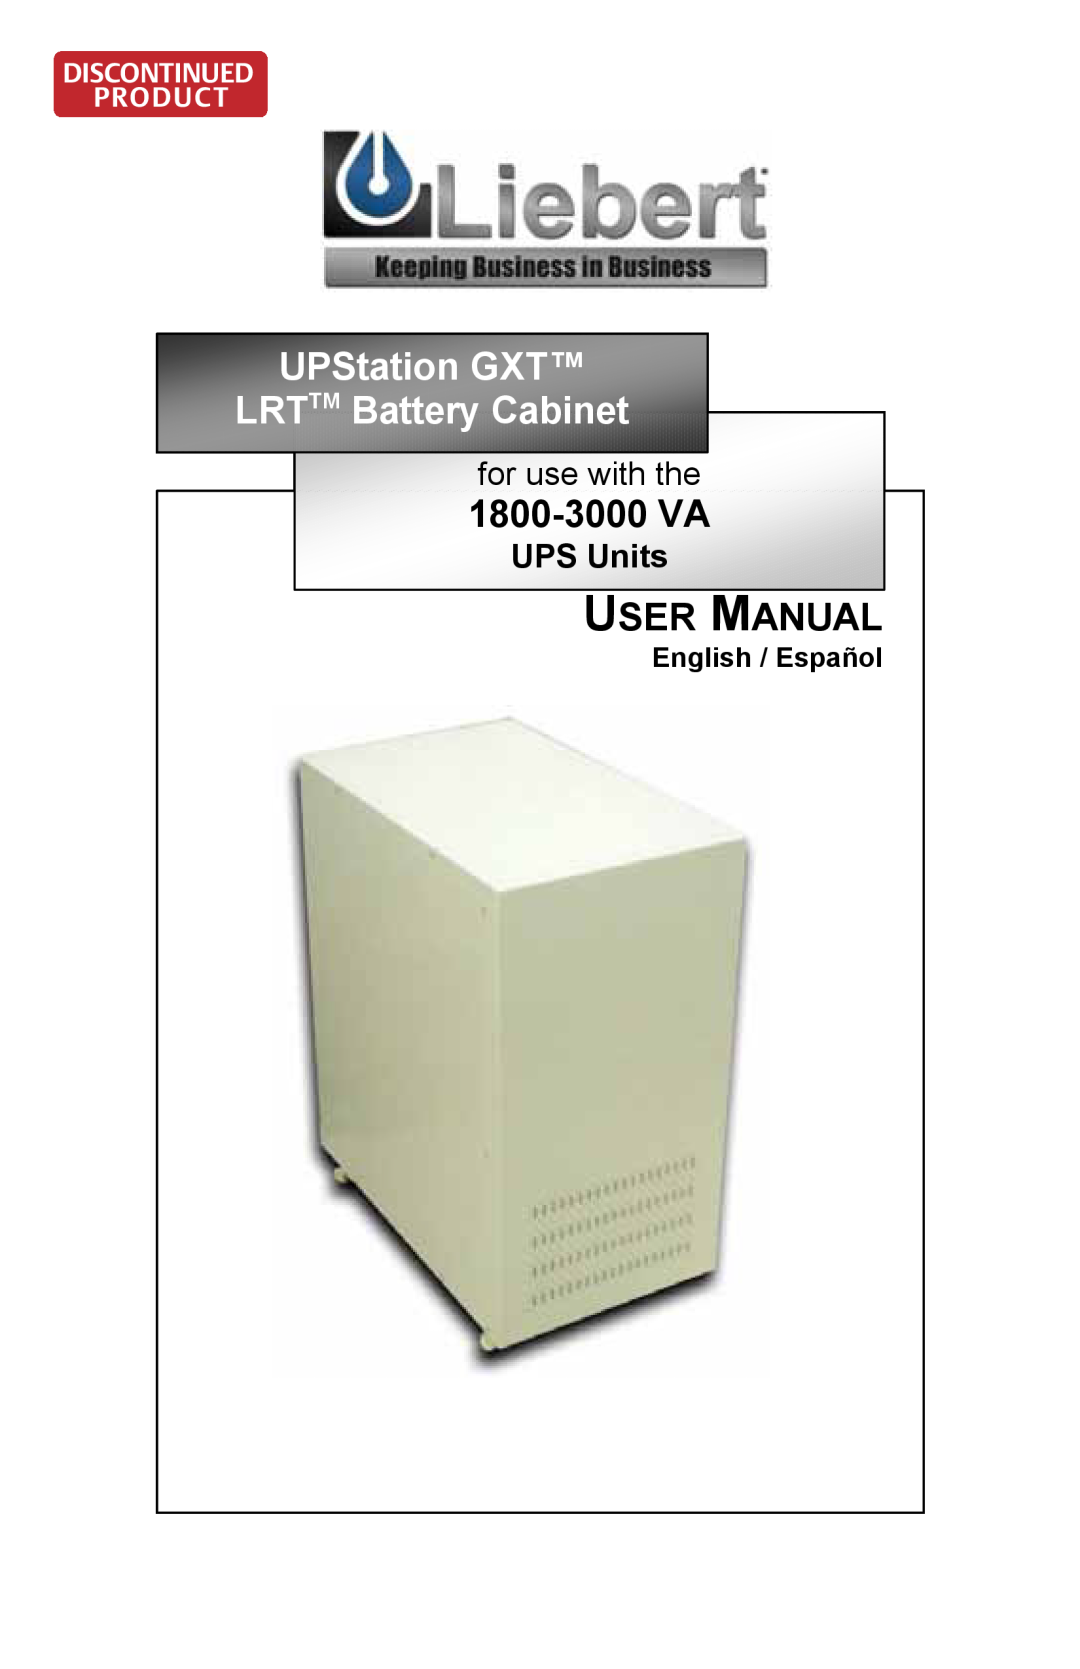 Liebert GXT96VLRT2UL user manual UPStation GXT, User Manual, for use with the, LRT TM Battery Cabinet, 1800-3000 VA 